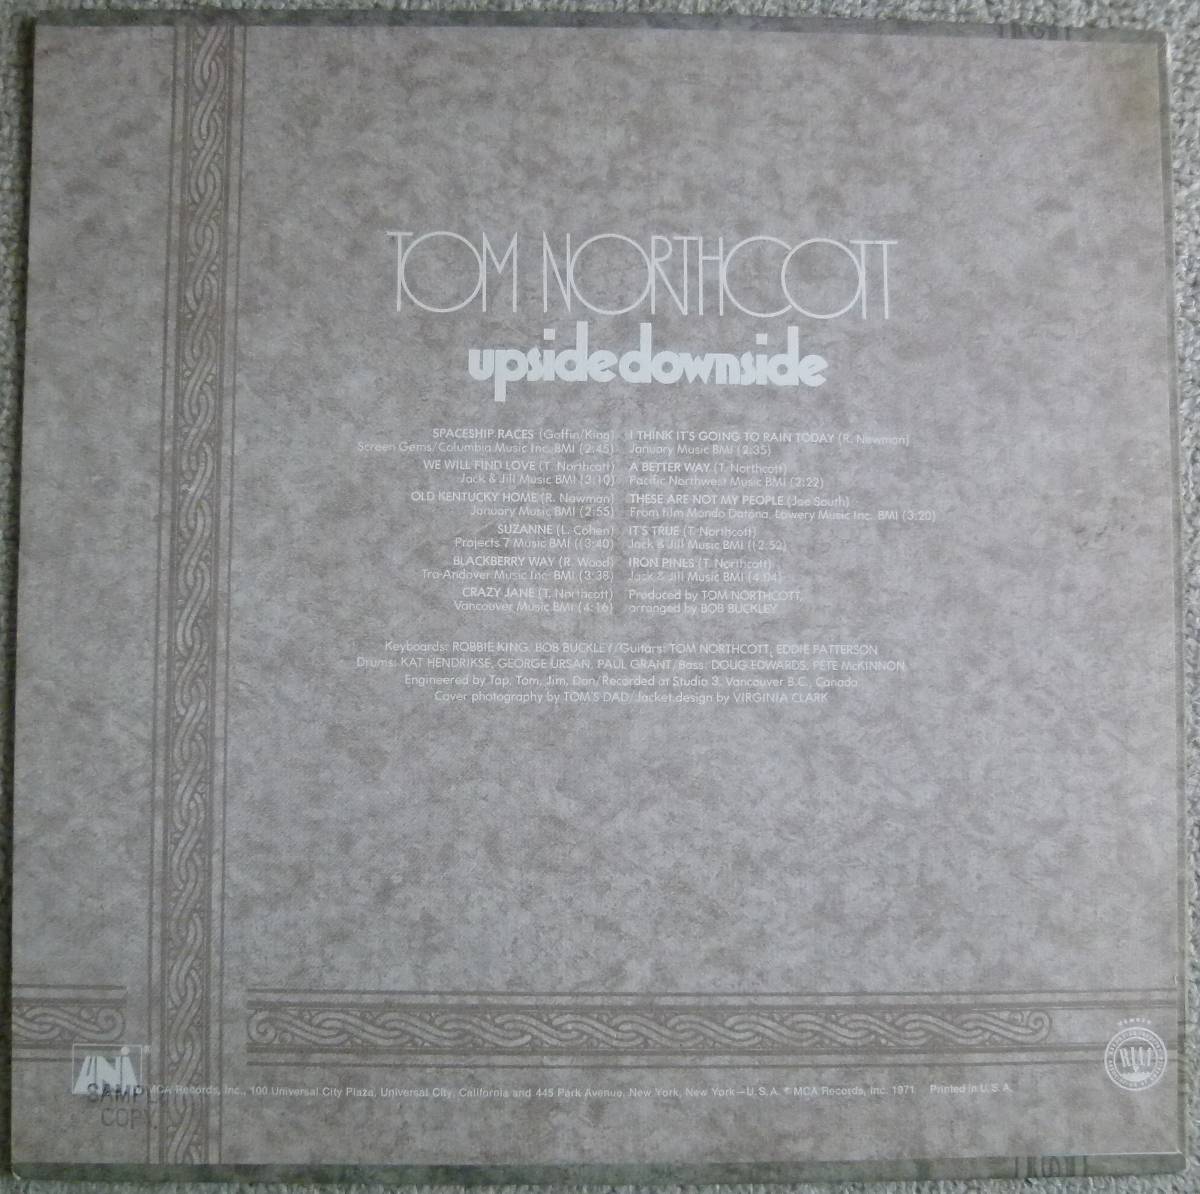 Tom Northcott『Upside Downside』LP Soft Rock ソフトロック_画像2